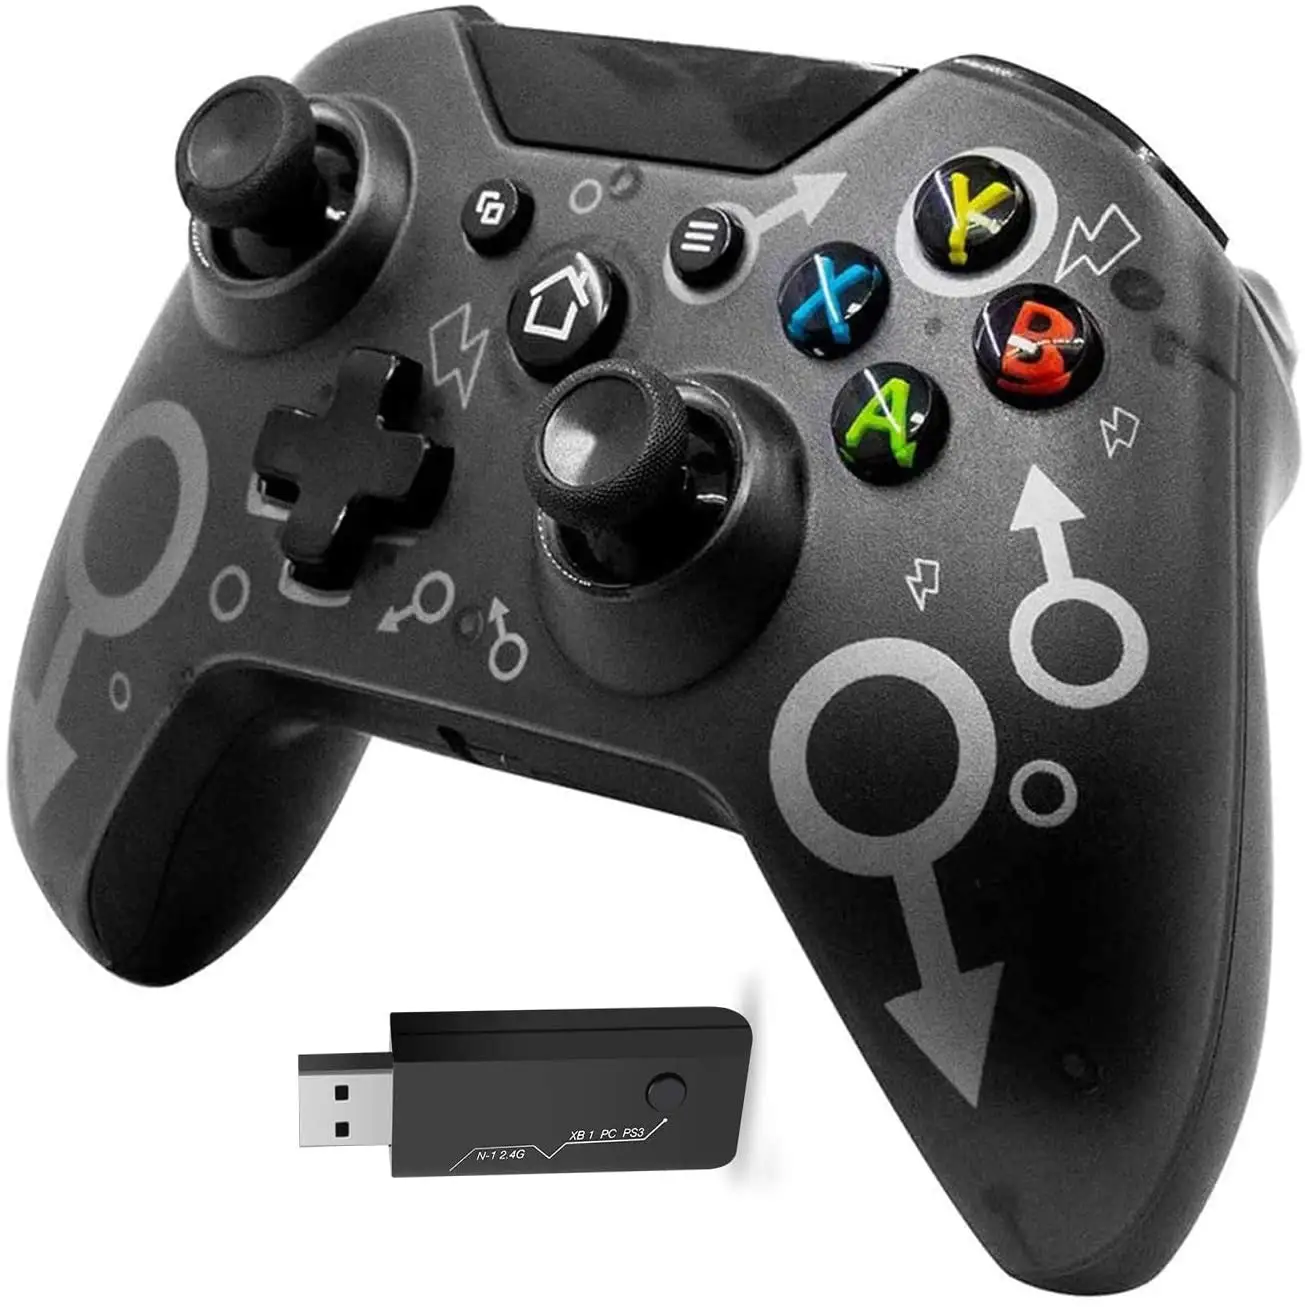 2,4 GHZ Wireless Controller Dual Vibration Gamepad für Xbox One/One S/One X/PS3/Windows PC 7/8/8.1/10